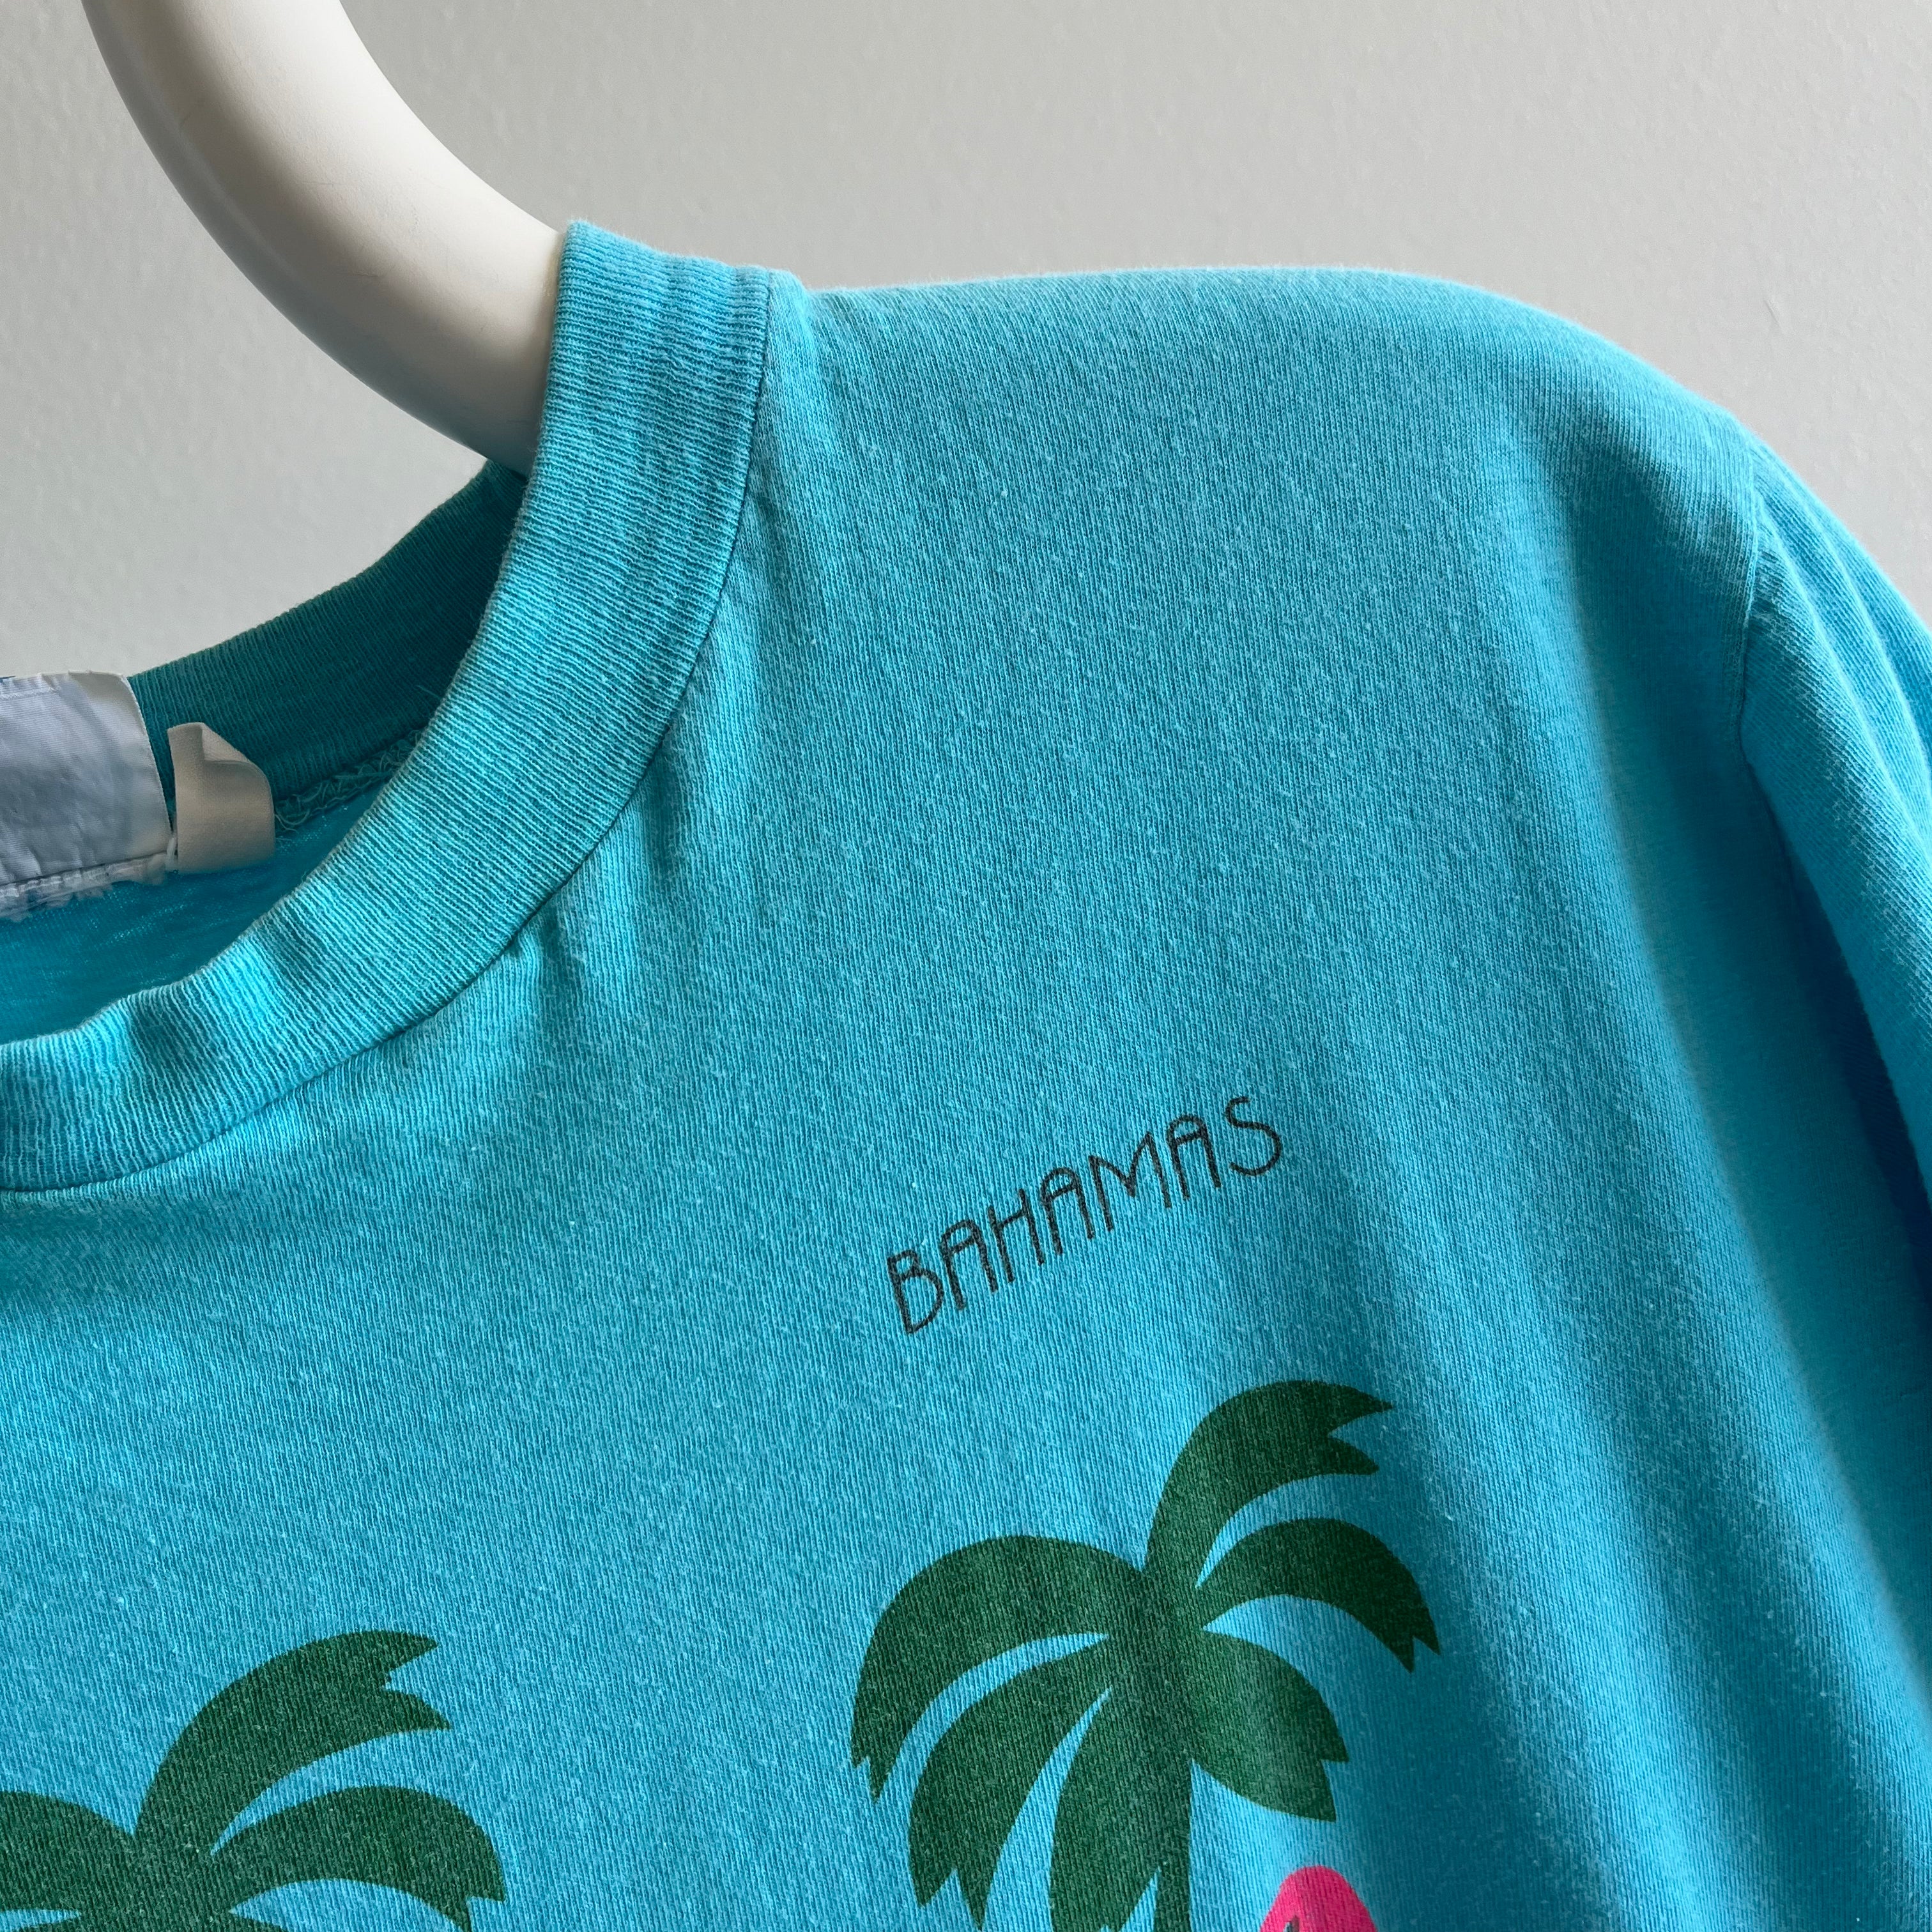 1980s Bahamas Flamingos X-Long T-Shirt Dress